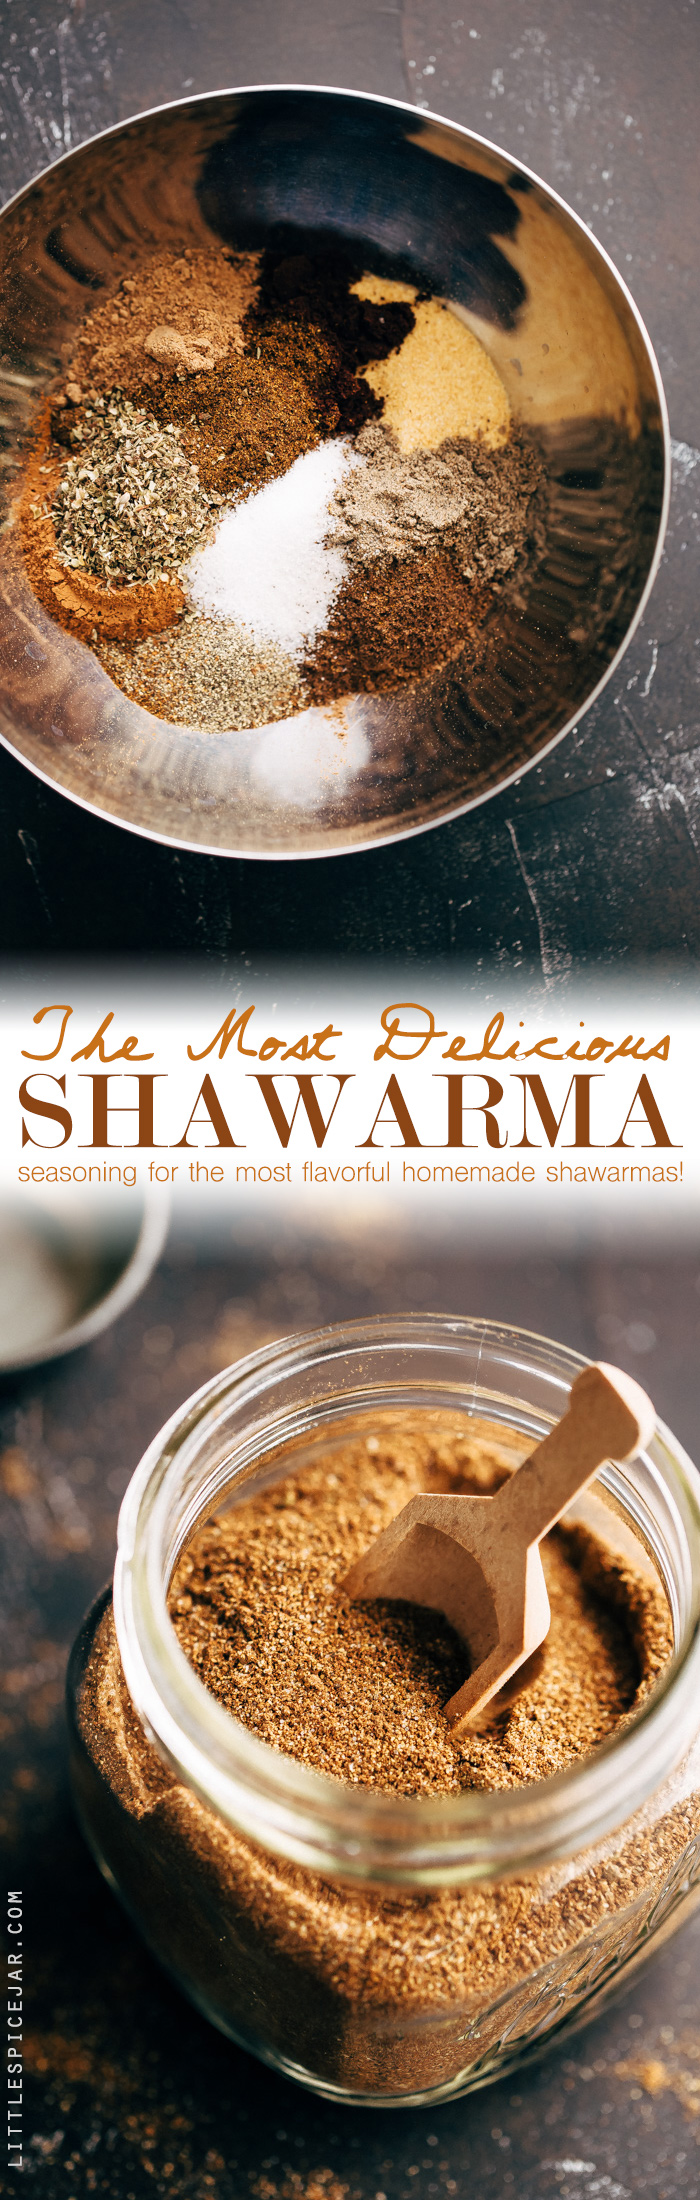 shawarma seasoning pin for Pinterest